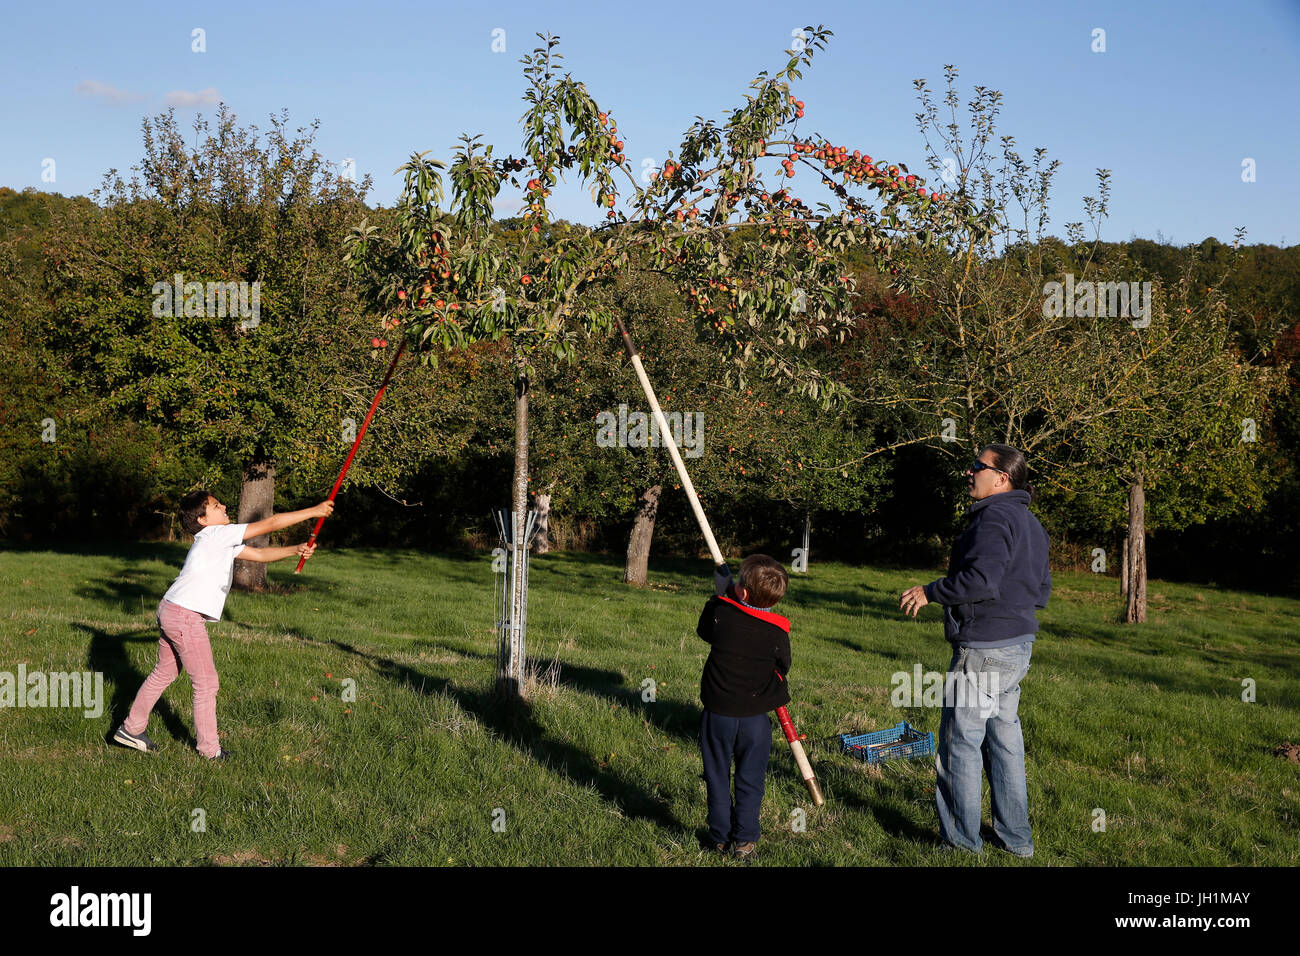 Boys knocking down apples. France. Stock Photo